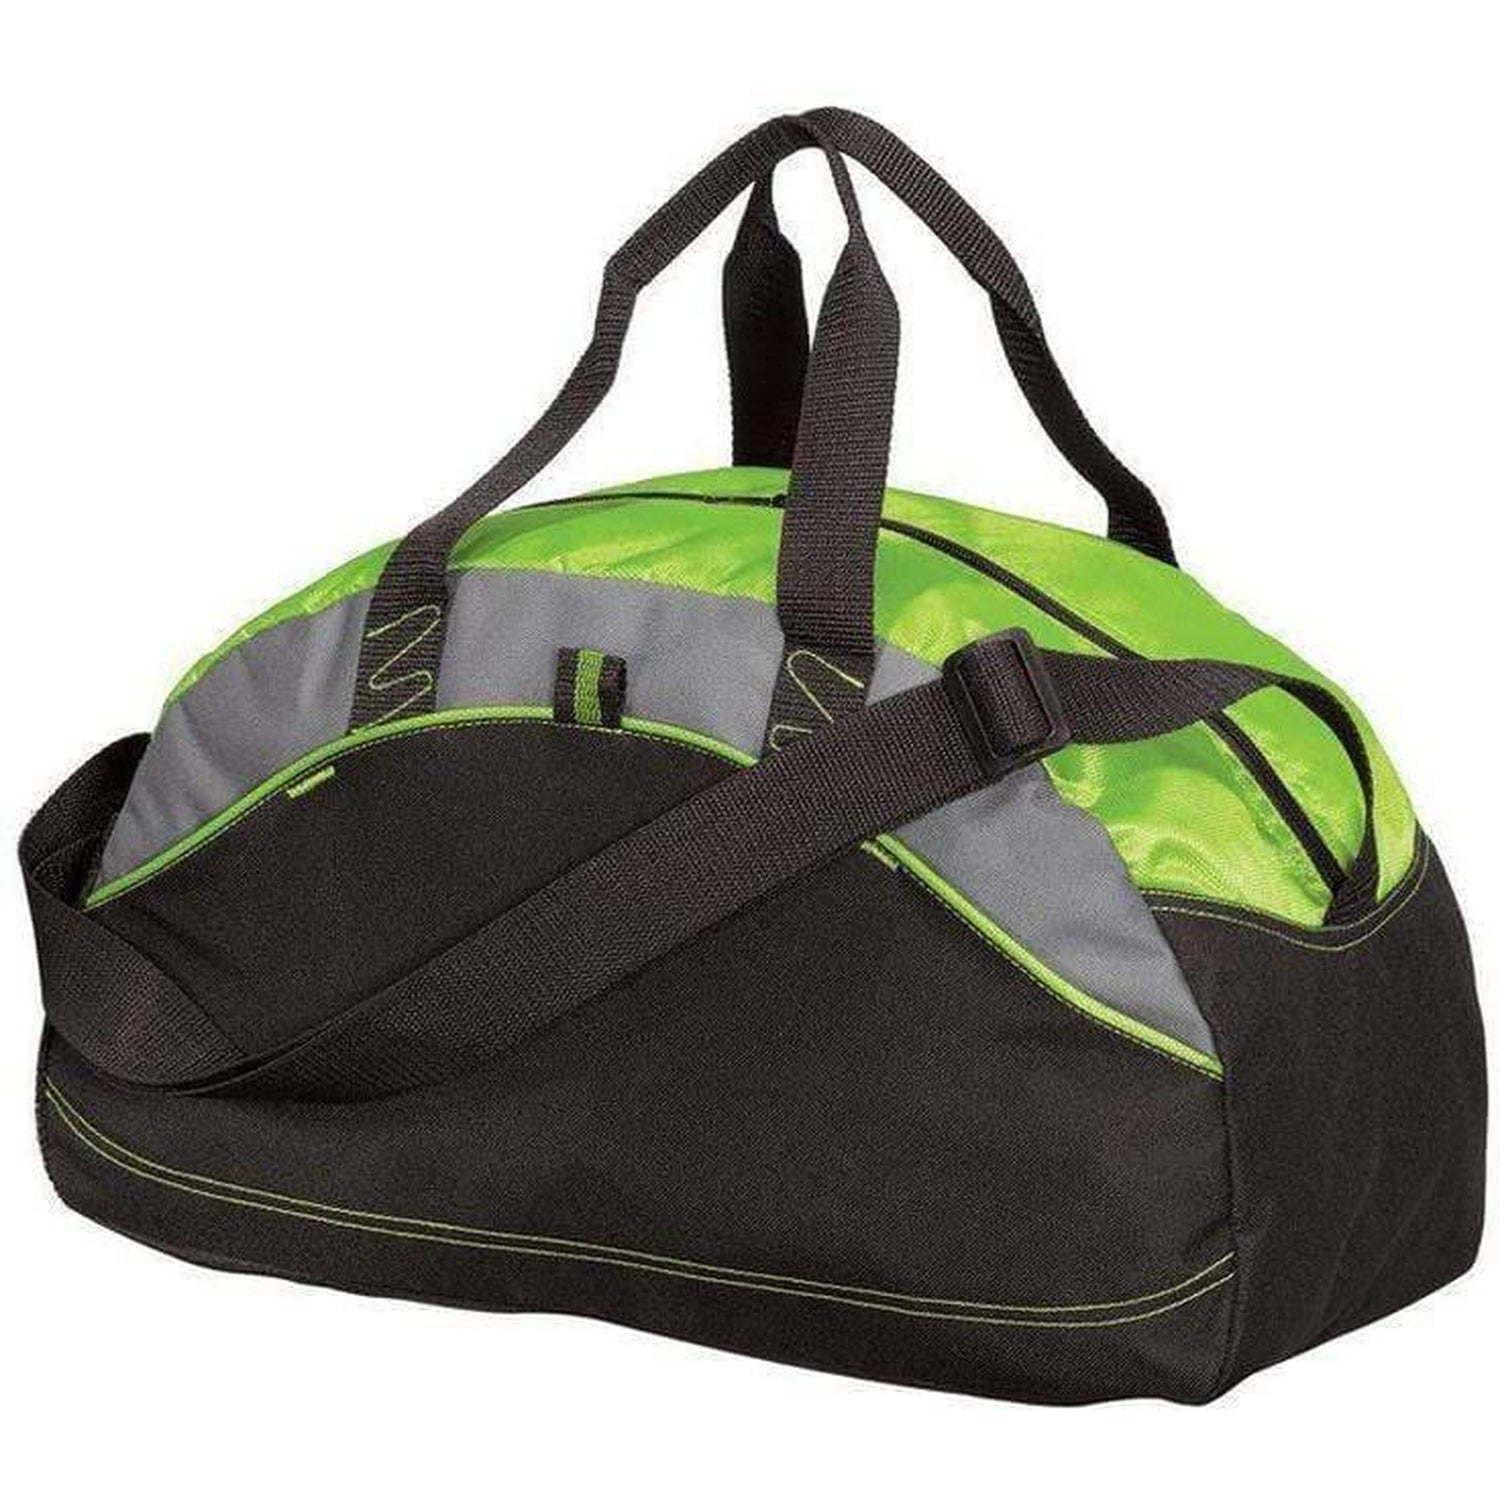 Wholesale Duffle Bags & Duffle Bags in Bulk, Travel Duffle Bags – BagzDepot™